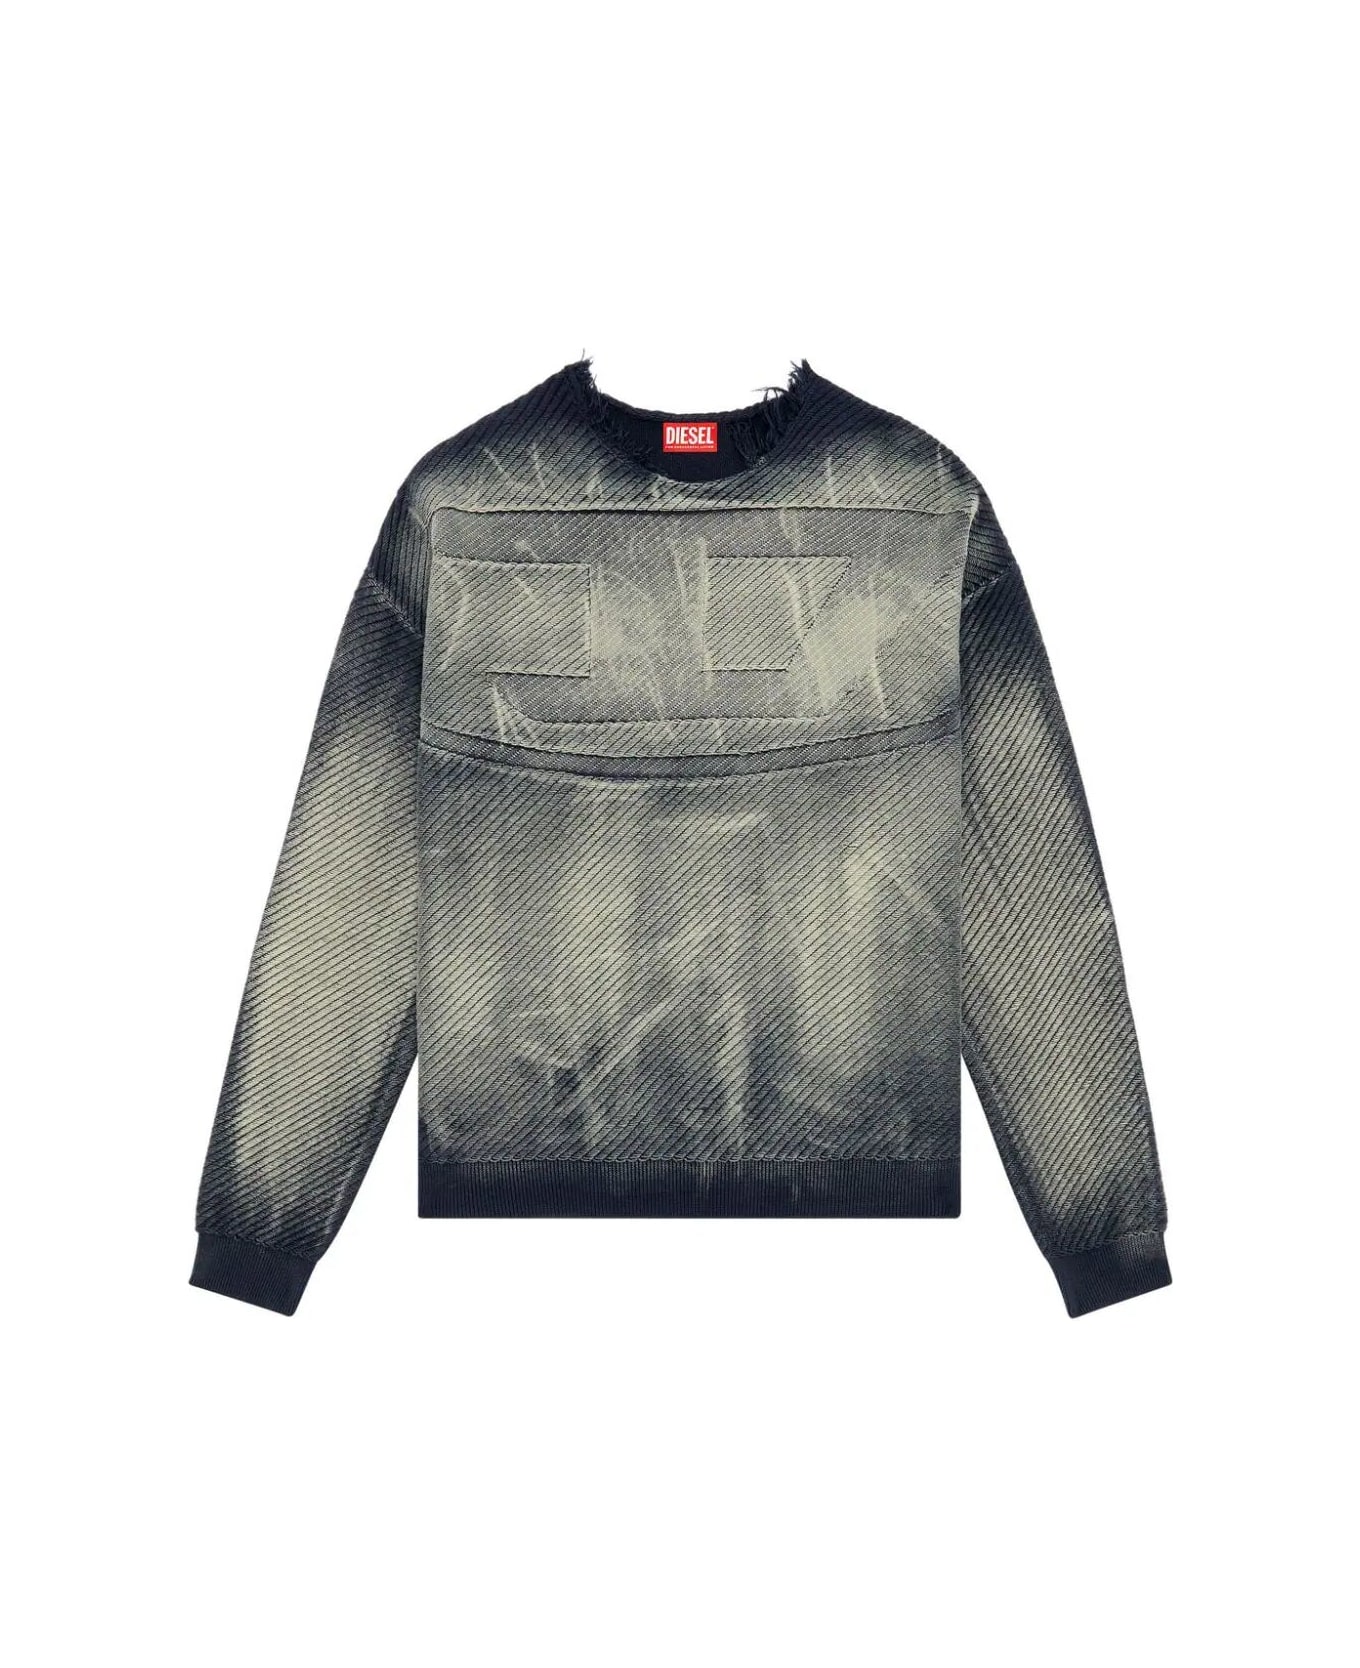 Diesel Klever Sweater - At Grey フリース